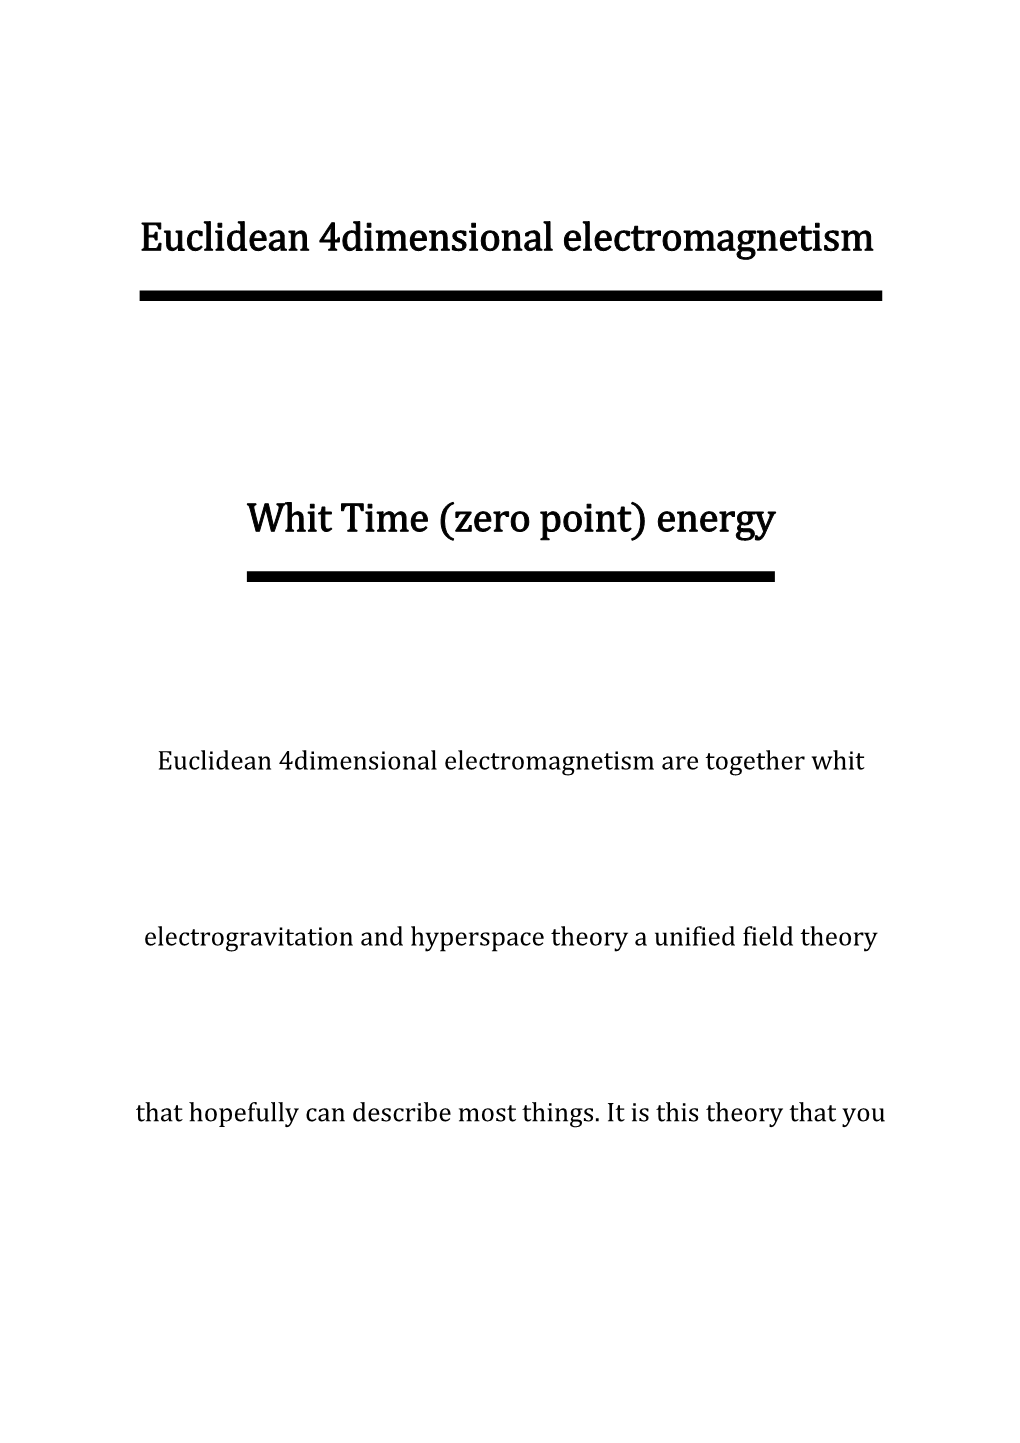 Euclidean 4Dimensional Electromagnetism